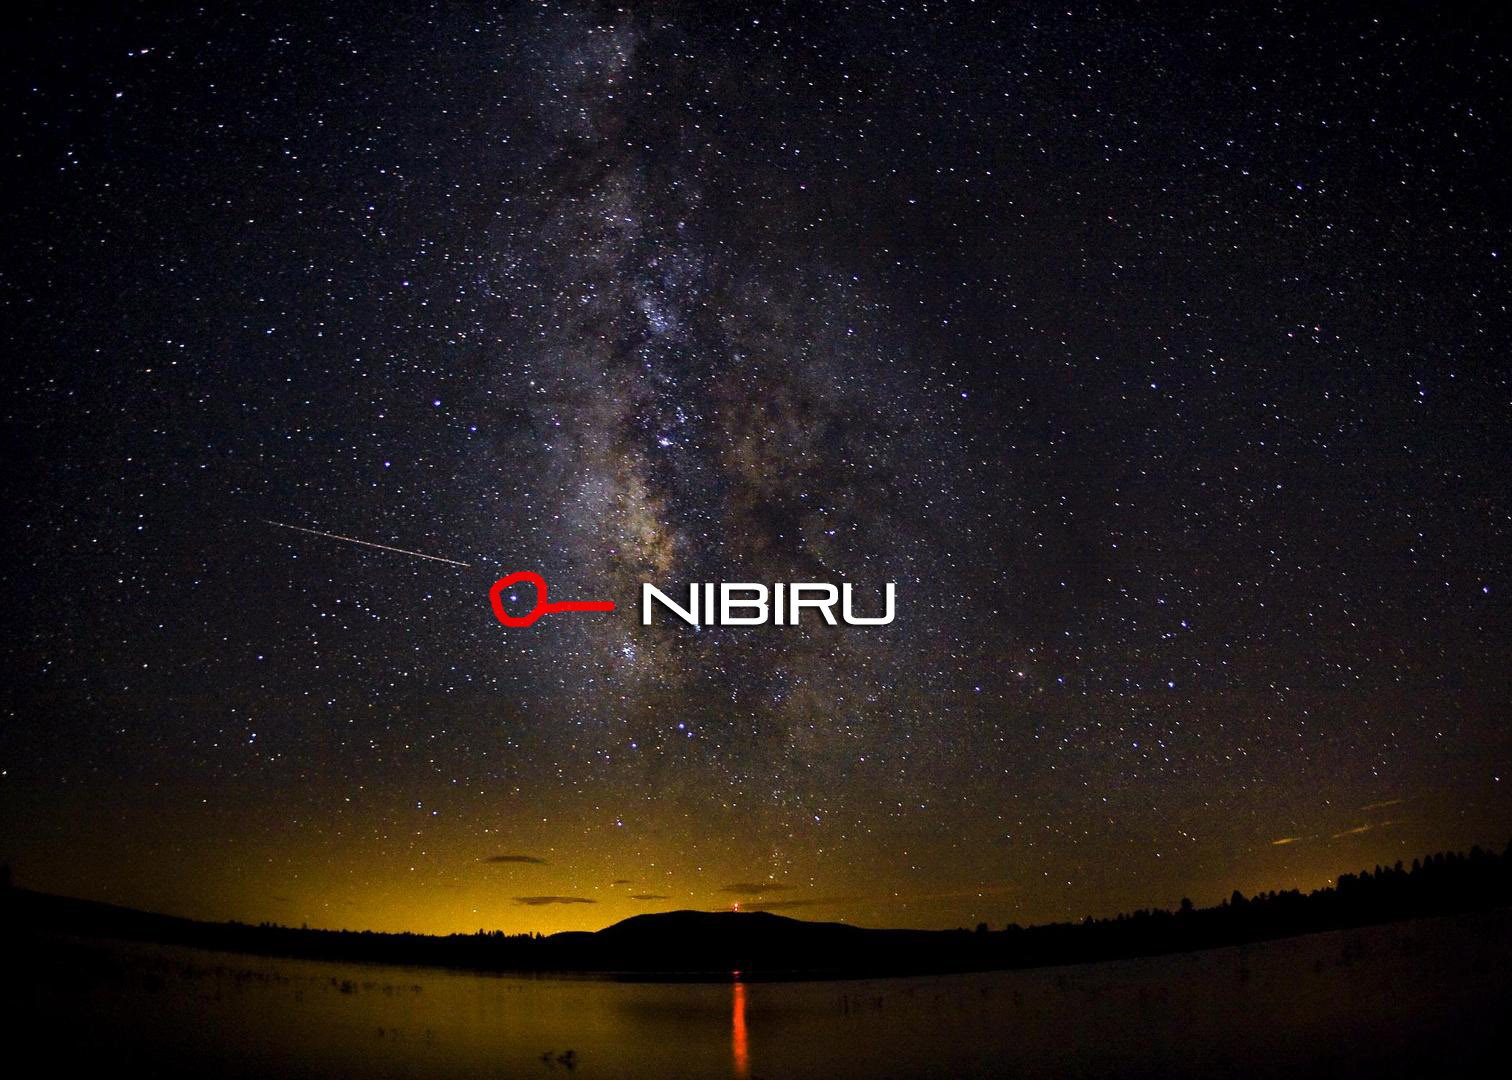 New Nibiru Images, Planet Nibiru, Planet X, Anunnaki